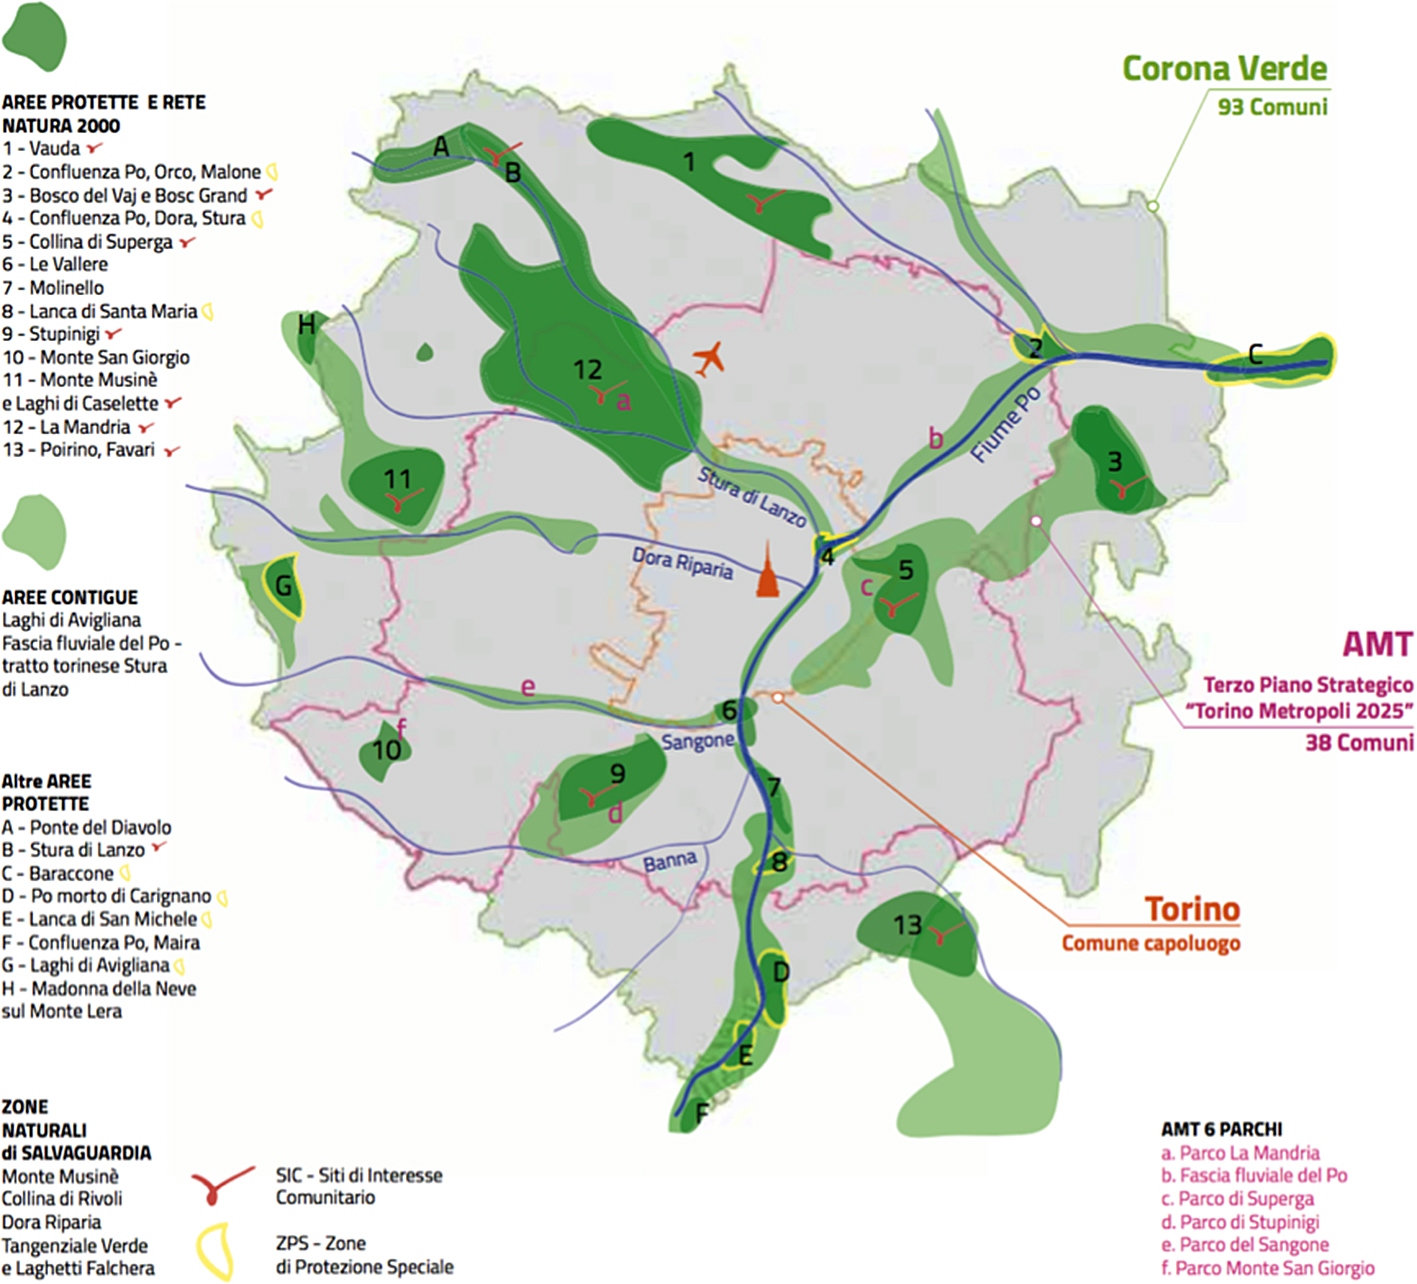 Corona verde's green areas. Authors' elaboration.